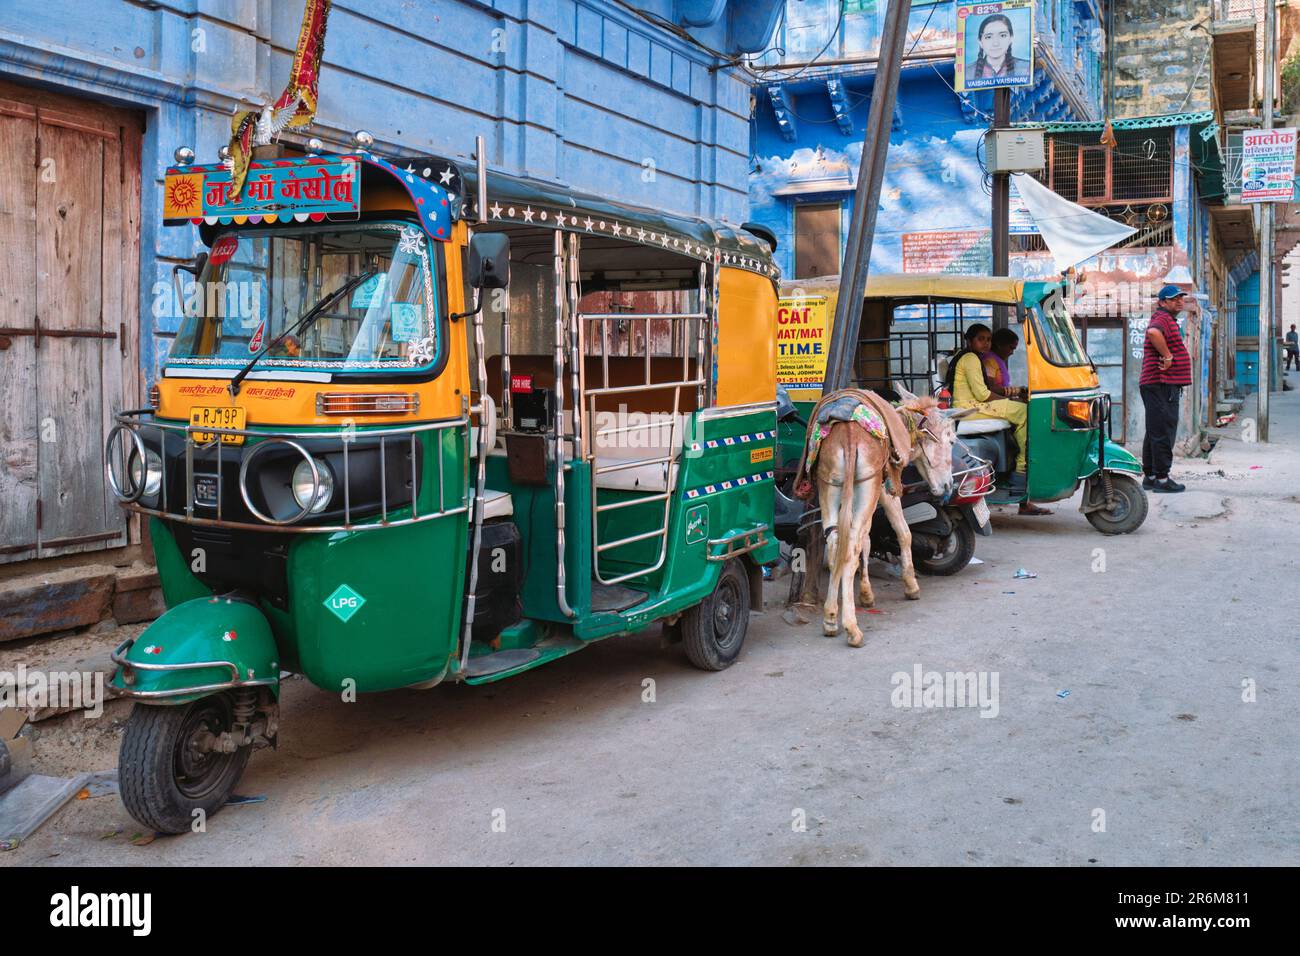 Auto rickshaw tuk tuk in indian street Stock Photo